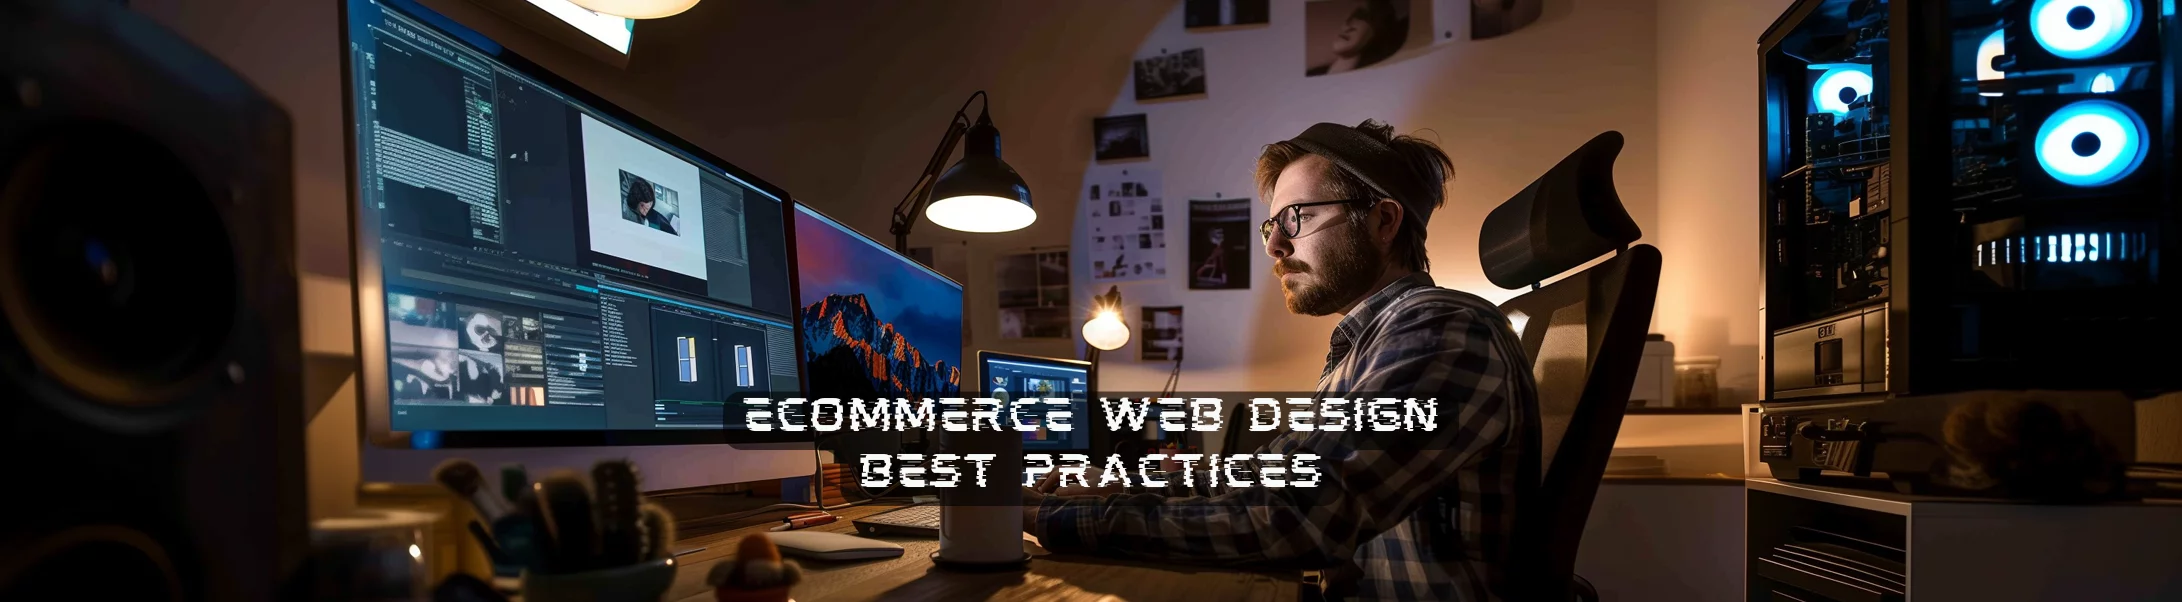 Key Principles of eCommerce Web Design Best Practices